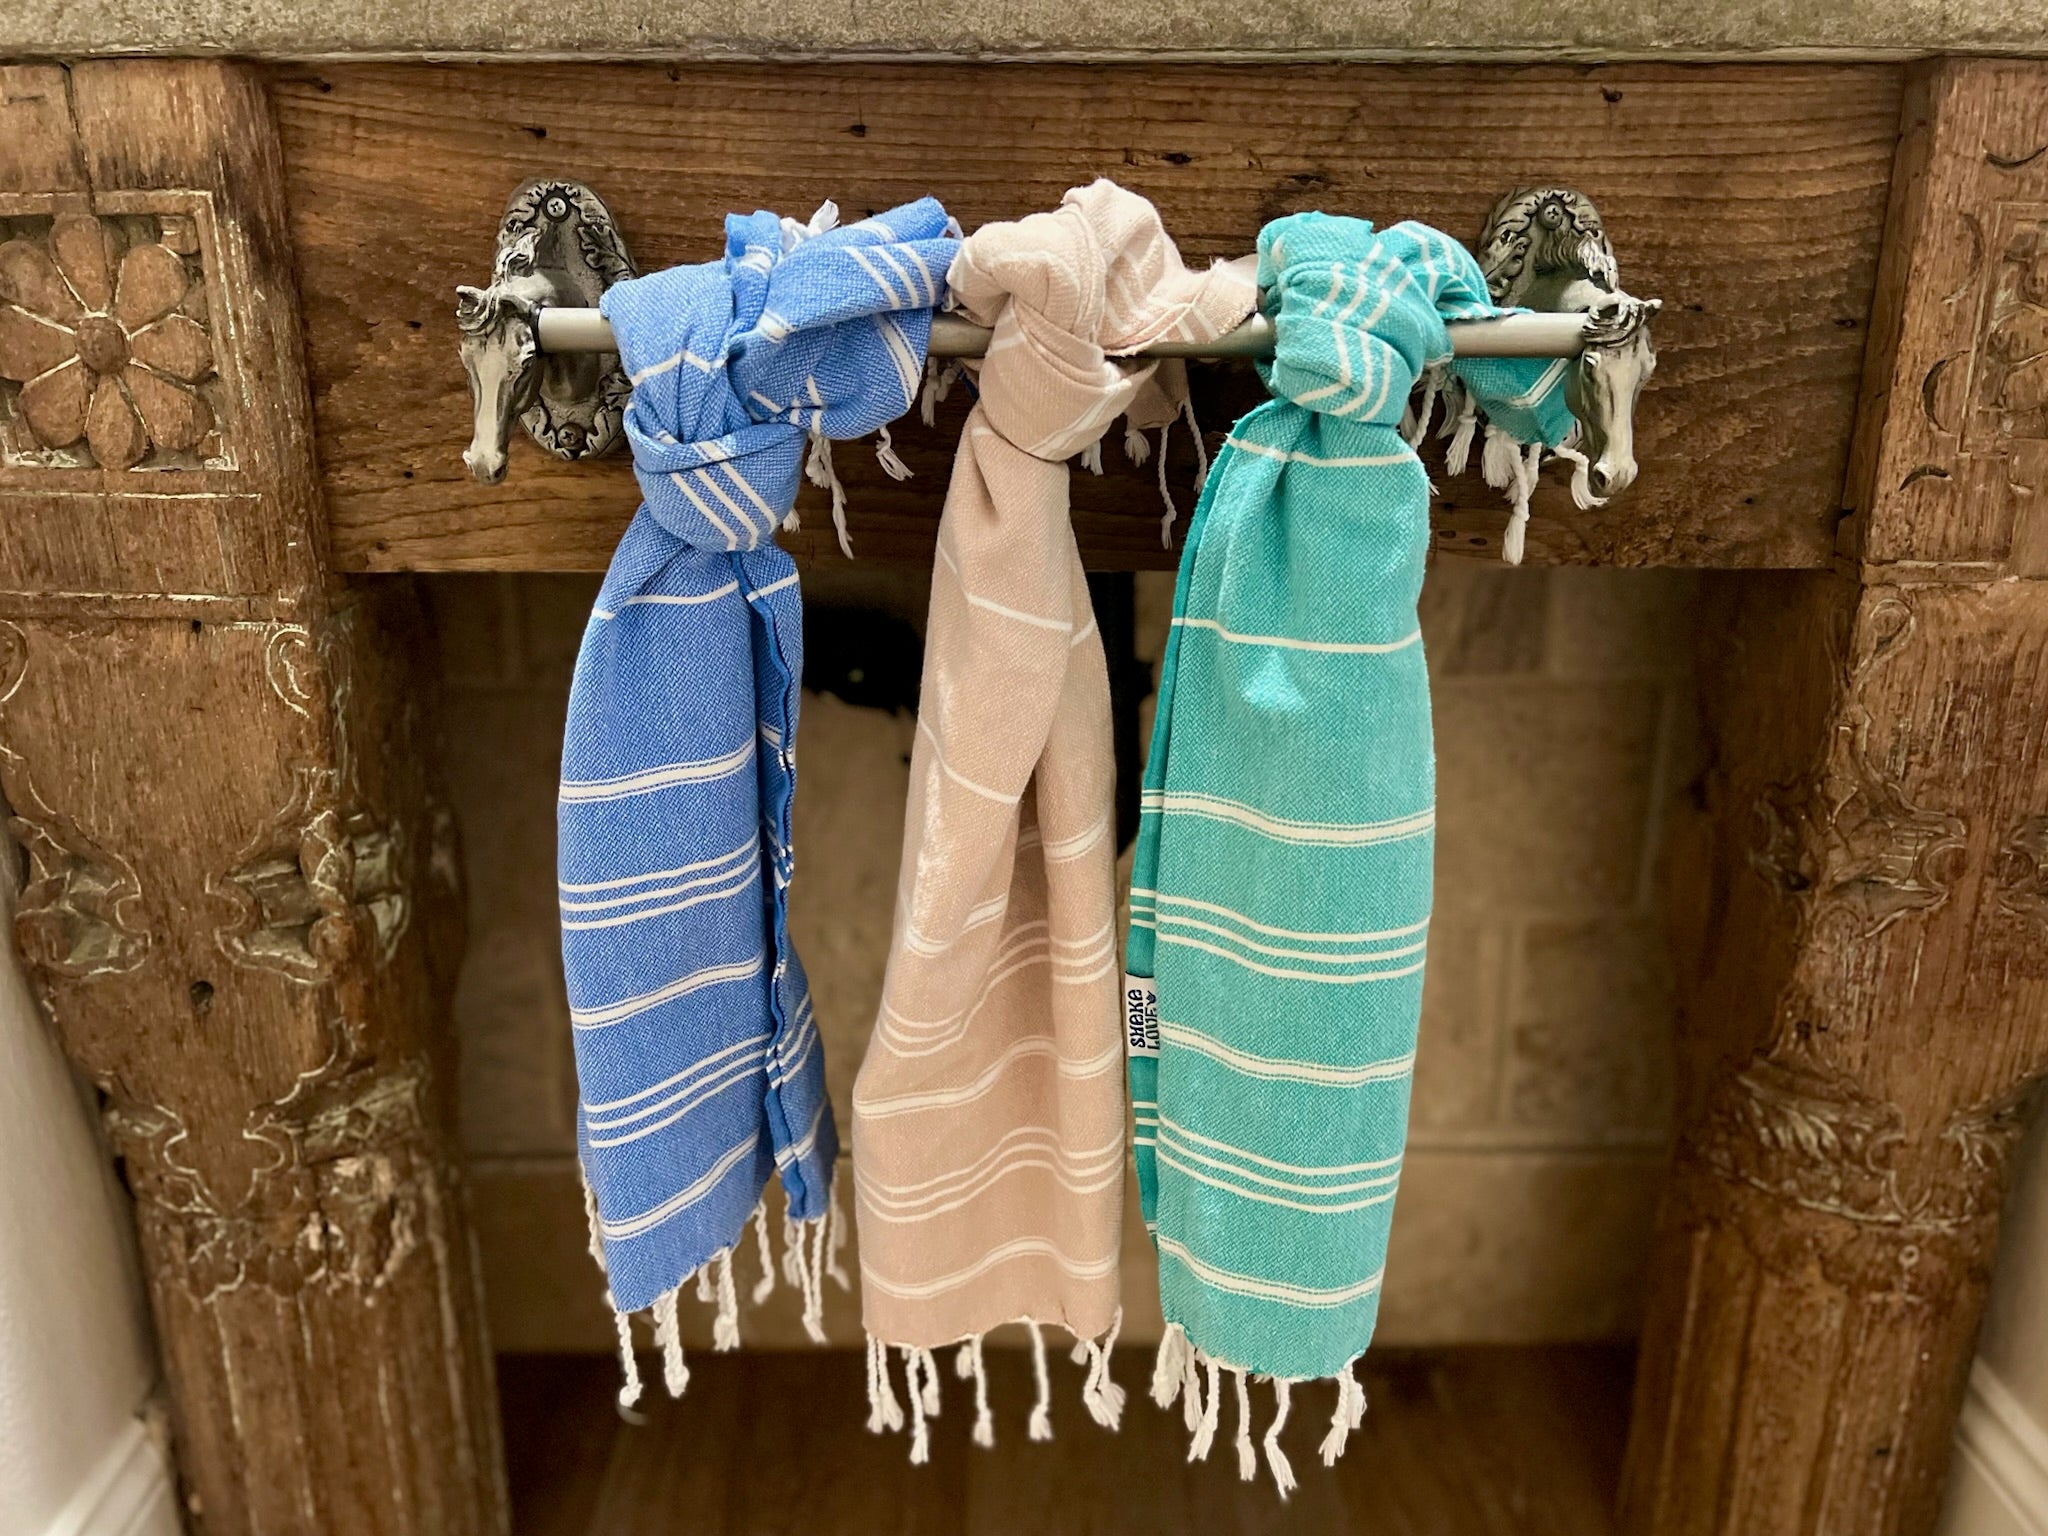 OCEAN BLUE Turkish Hand Towels - Set of 2 – Shaka Love